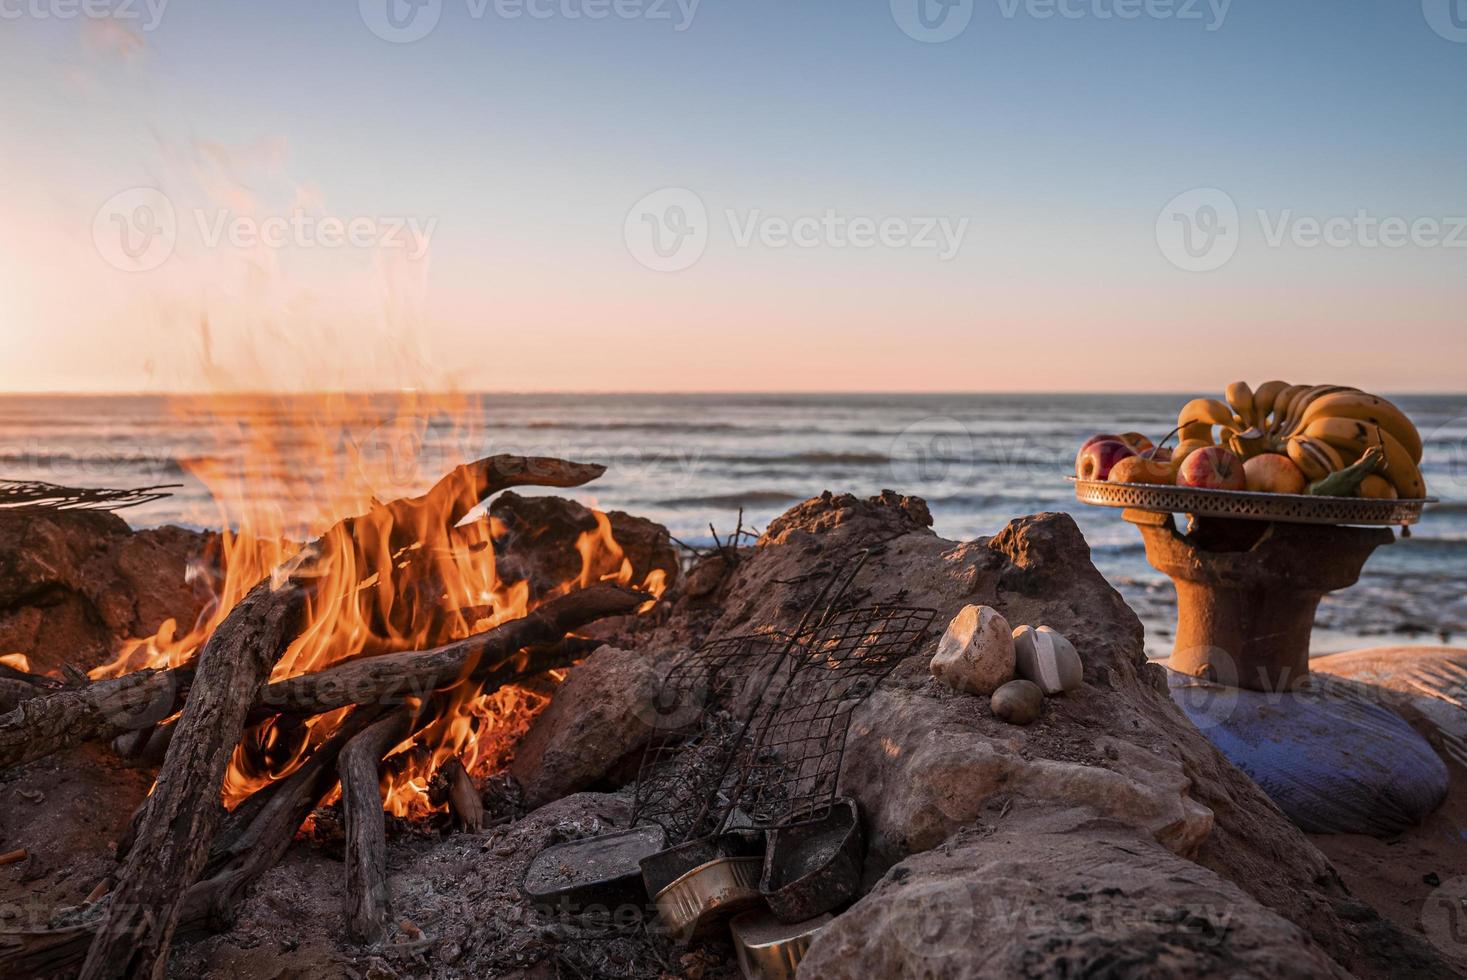 vers fruit in bord naast vreugdevuur met brandend brandhout op het strand in de avond foto